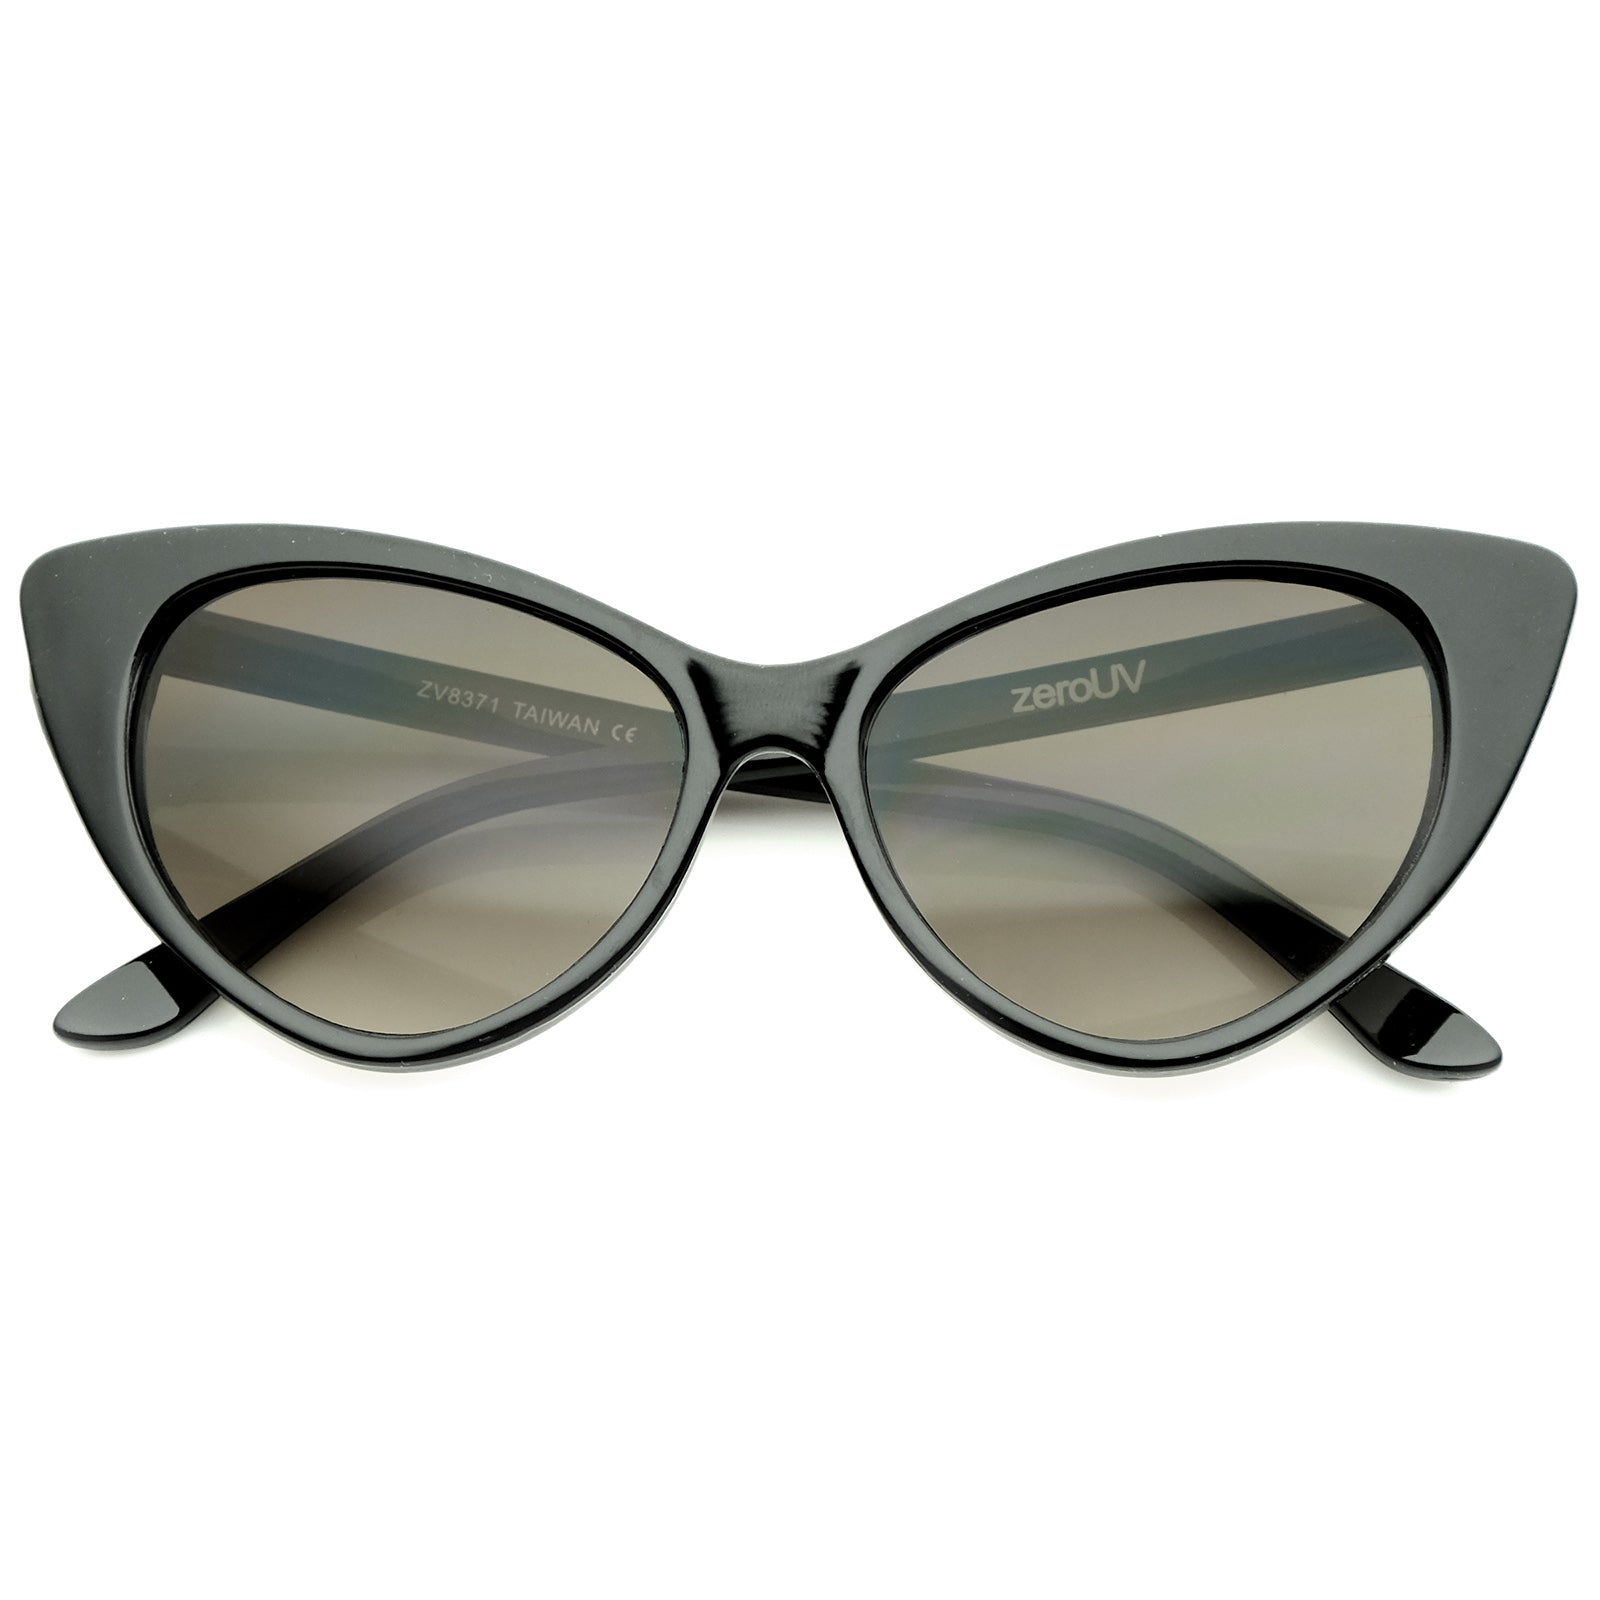 zeroUV Women's Retro Cat Eye Sunglasses